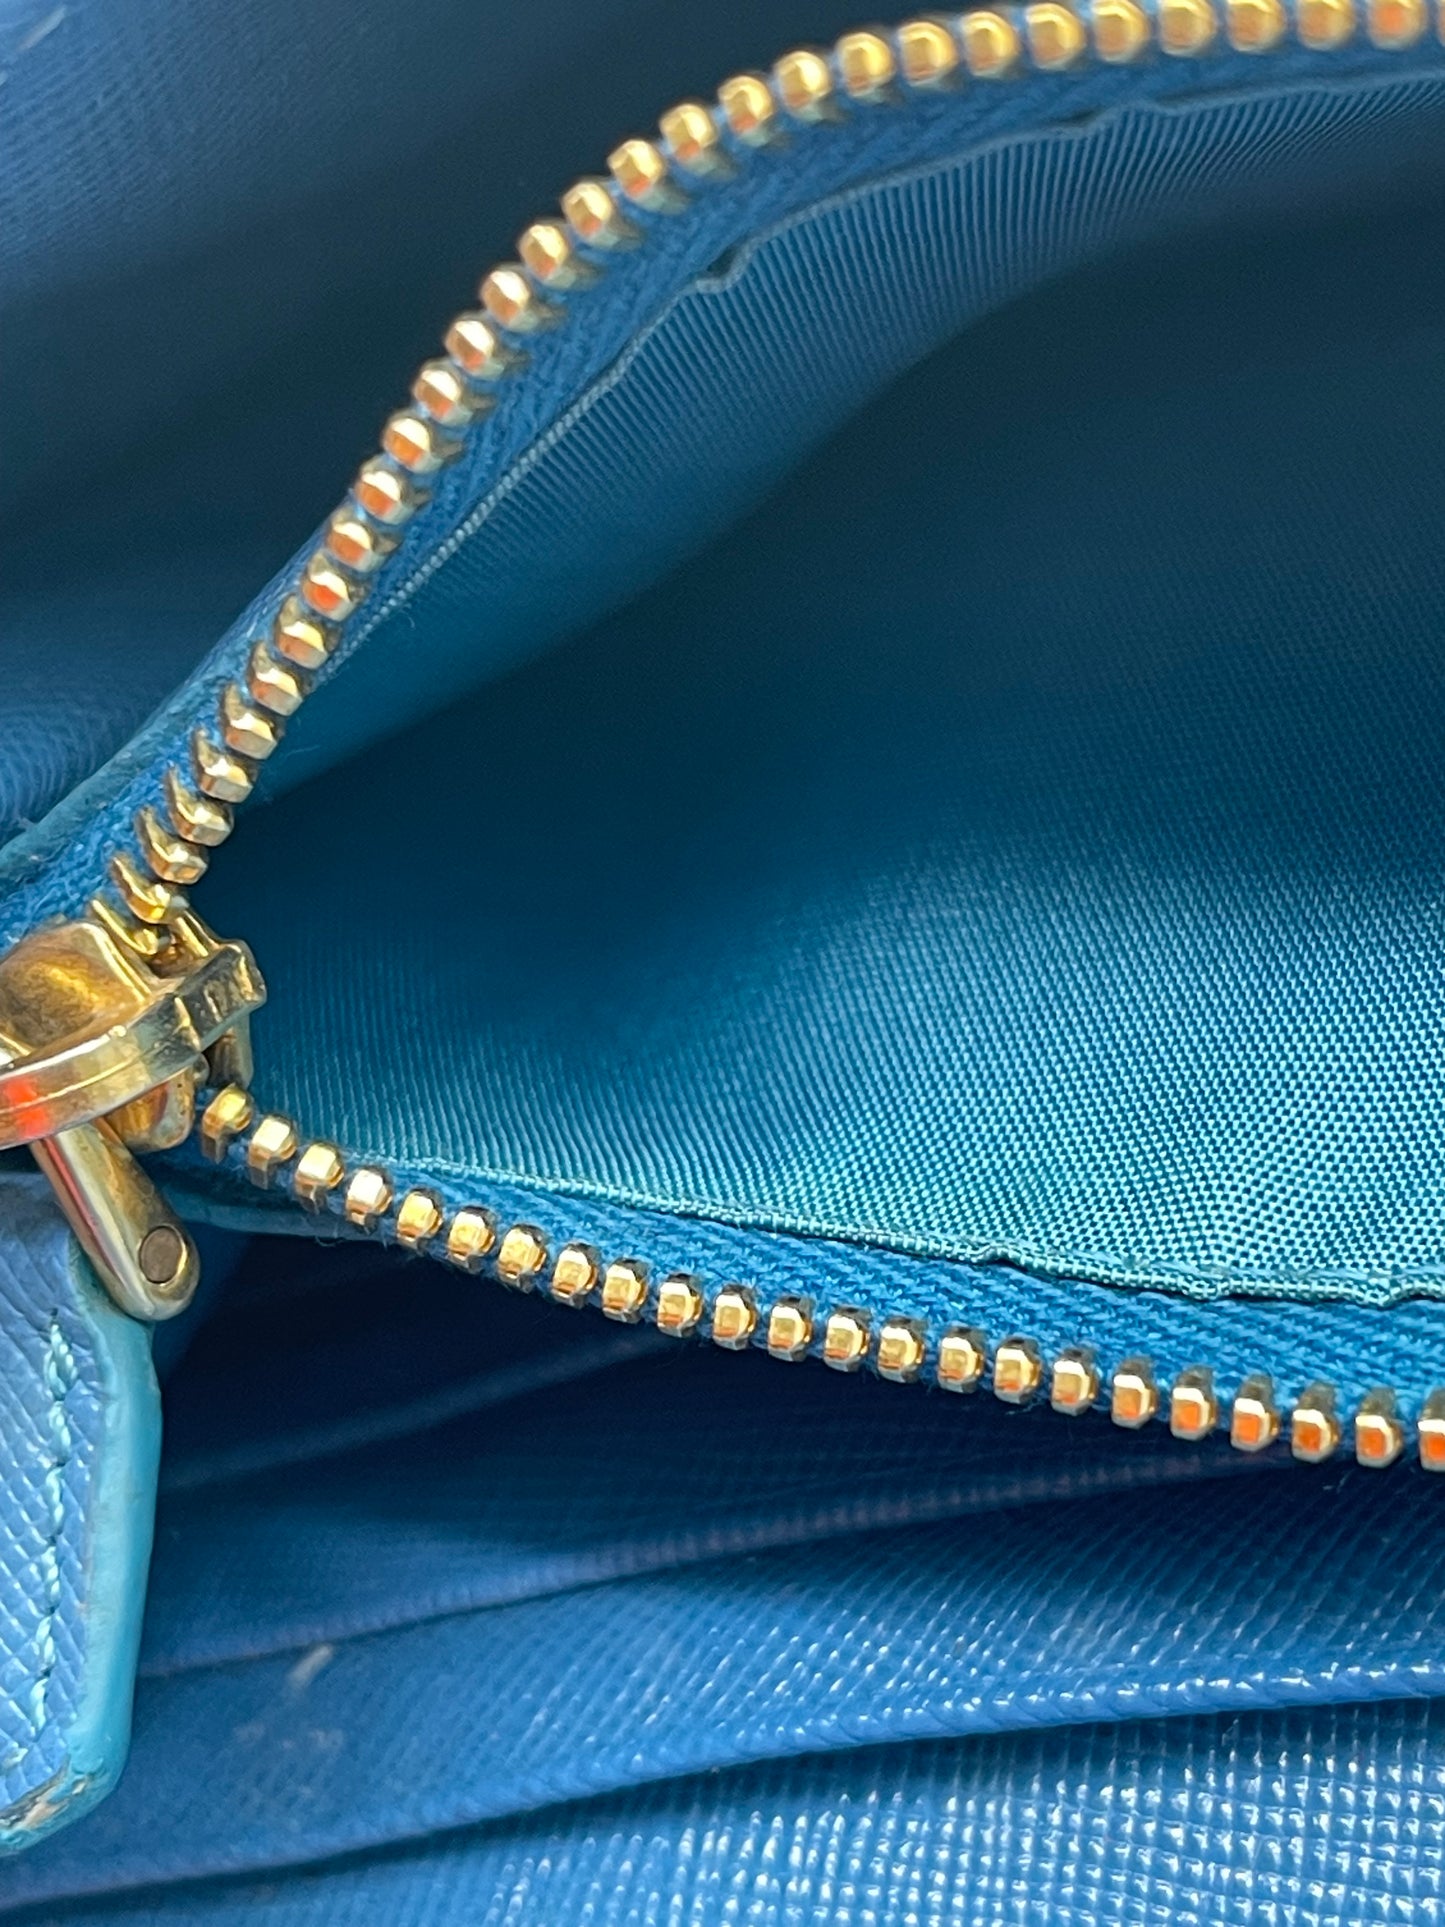 Prada mini saffiano leather crossbody bag